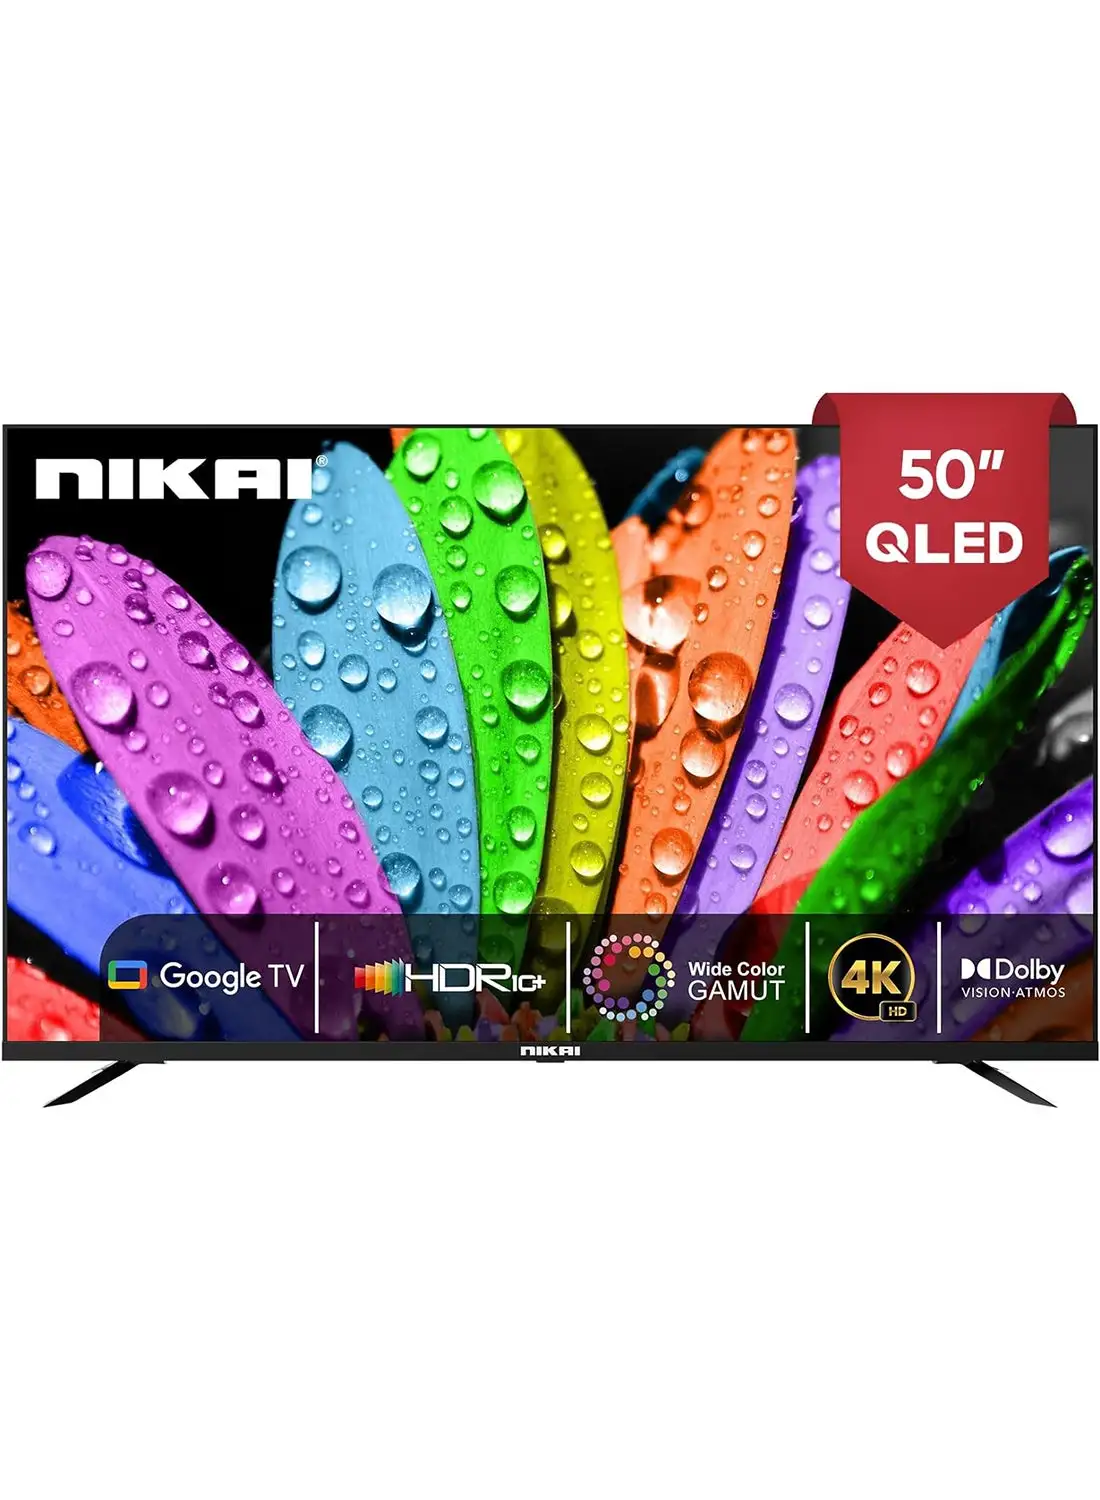 NIKAI Pro 50 Inch QLED 4K Smart Google TV, Andrioid TV OS, Voice Search, Youtube, Netflix, Shahid, Wide Color Gamut, 3860x2160 Pixels, HDR10+, Dolby Atmos, ChromeCast Bulit-in - NPROG50QLED NPROG50QLED Black